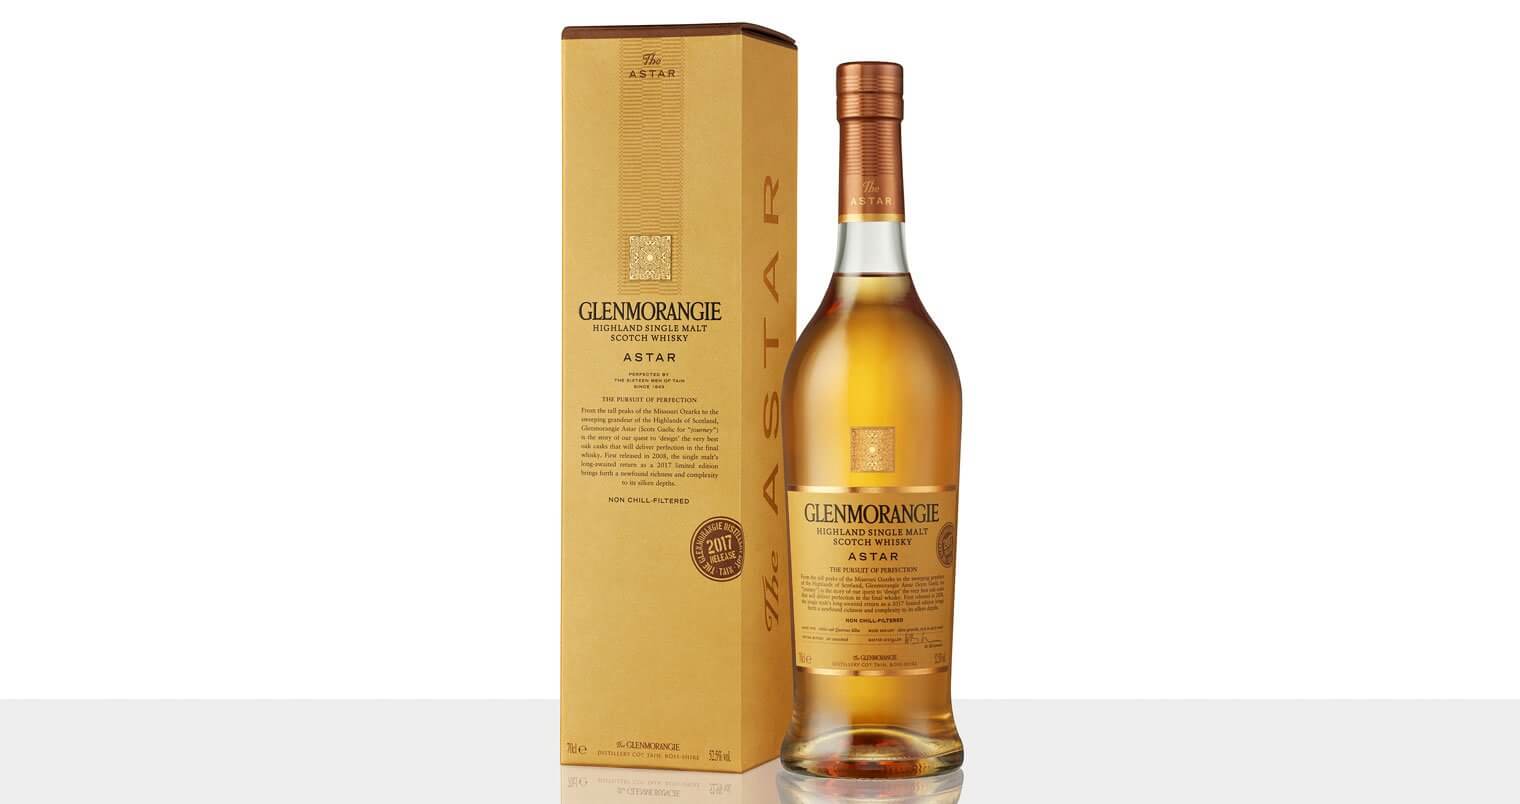 Glenmorangie Single Malt Whisky Reintroduces The Astar, featured image